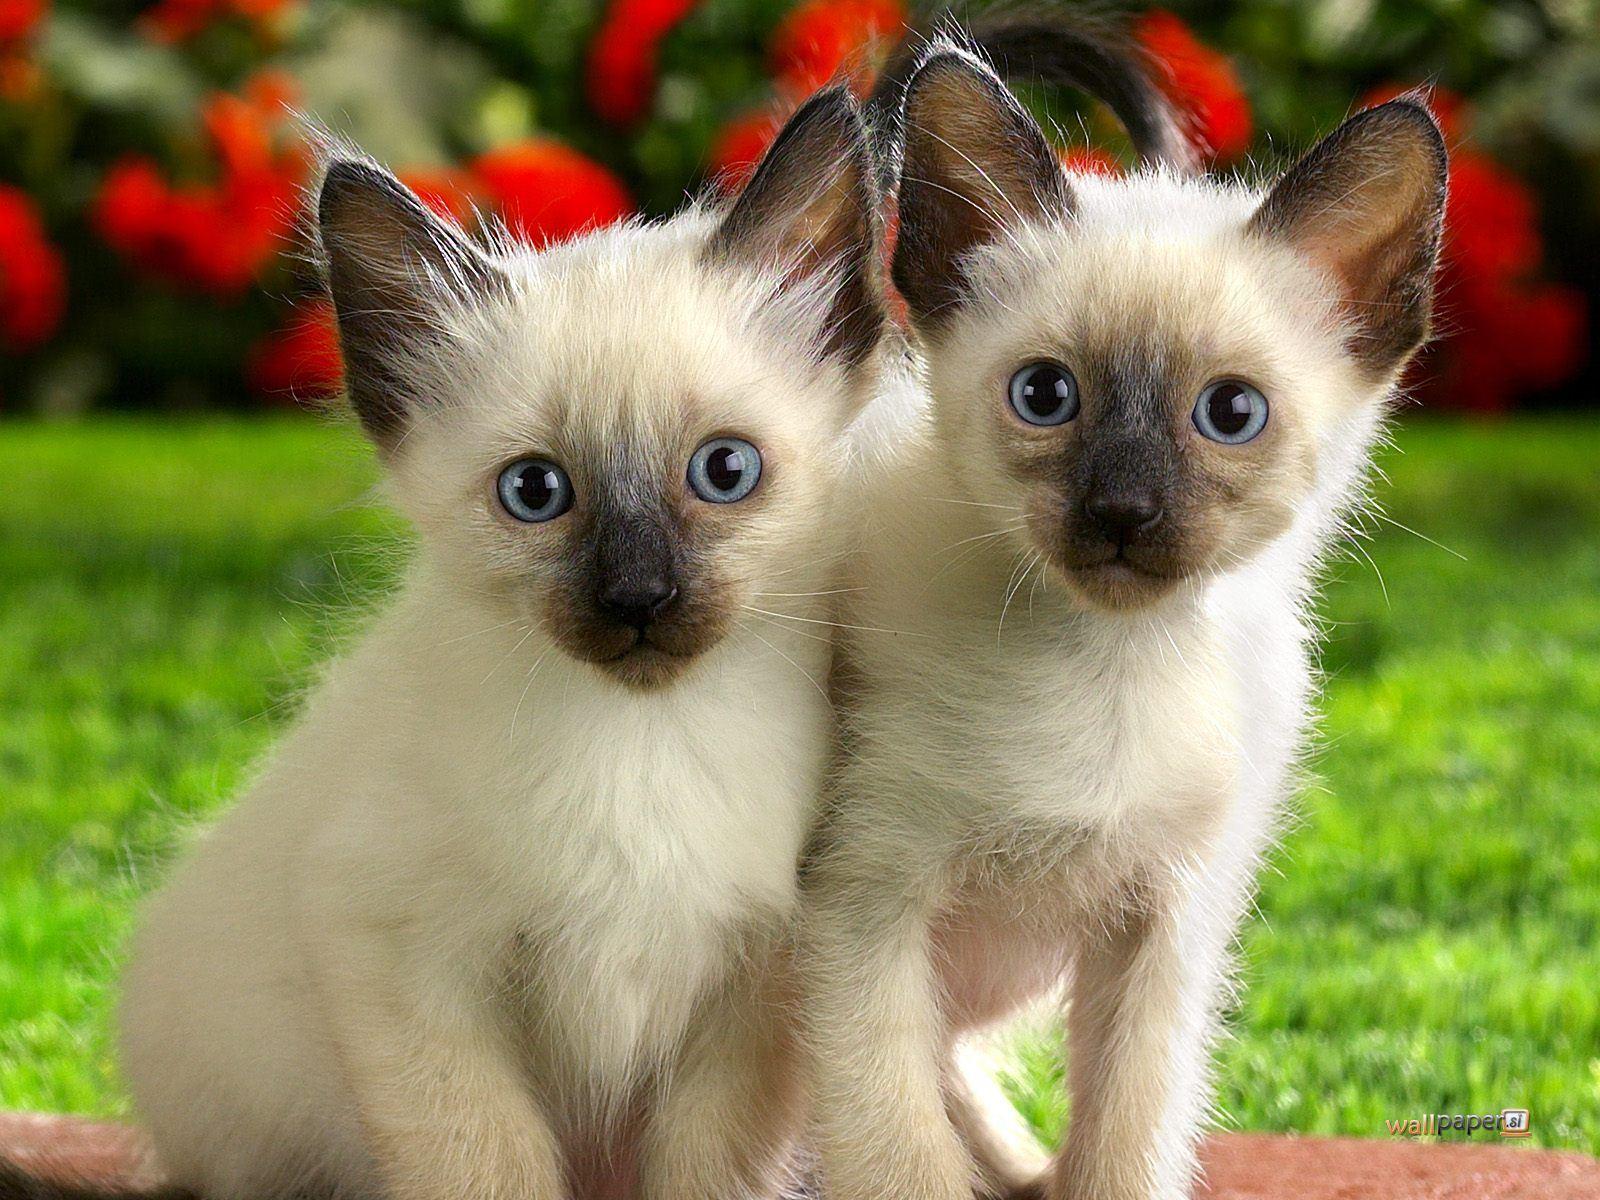 Siamese kittens photo and wallpaper. Beautiful Siamese kittens